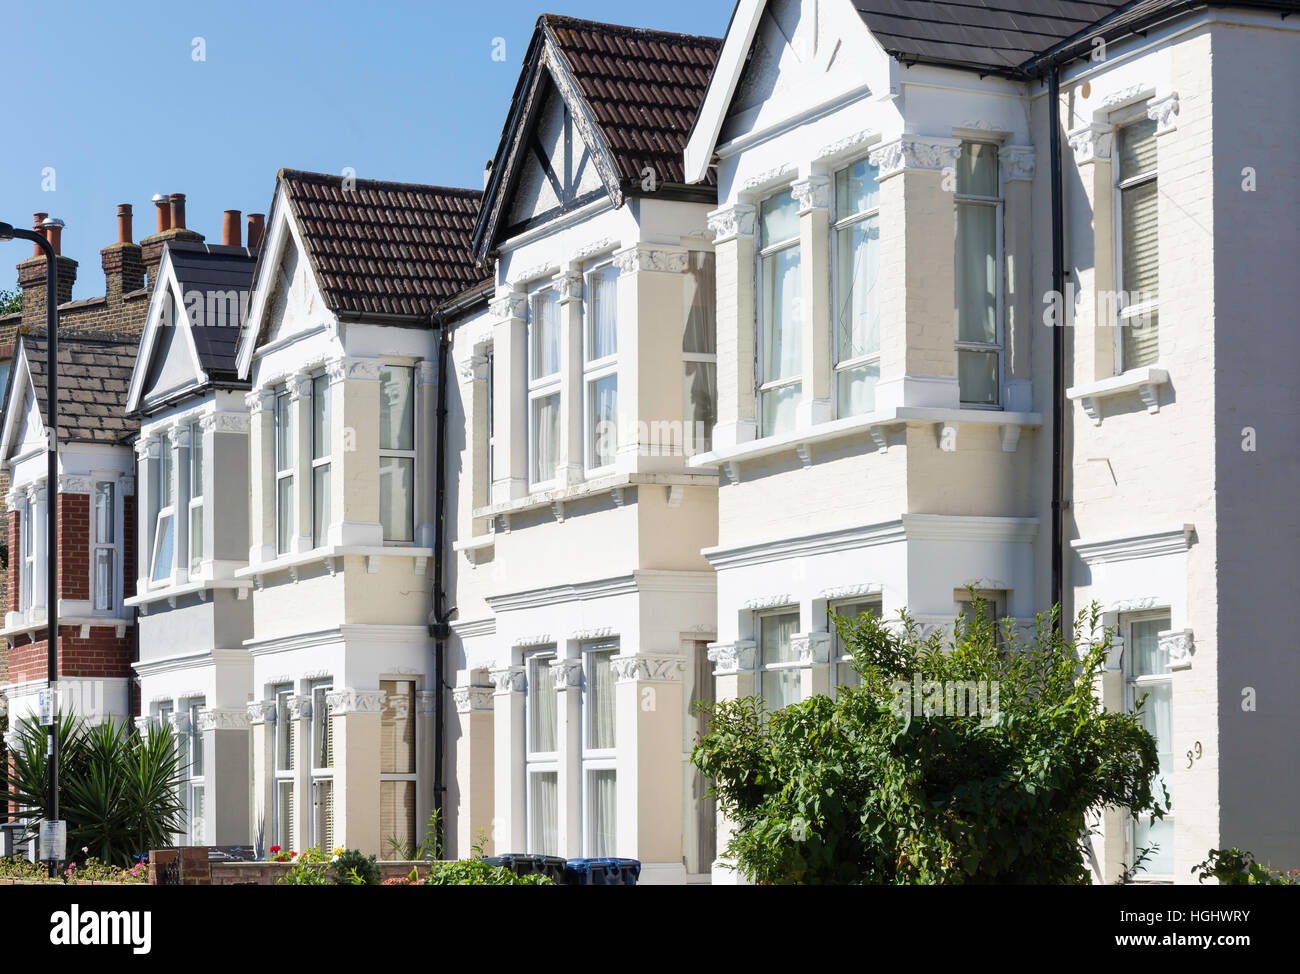 Maisons d'habitation, Hillcrest Road, Acton, London Borough of Ealing, Greater London, Angleterre, Royaume-Uni Banque D'Images